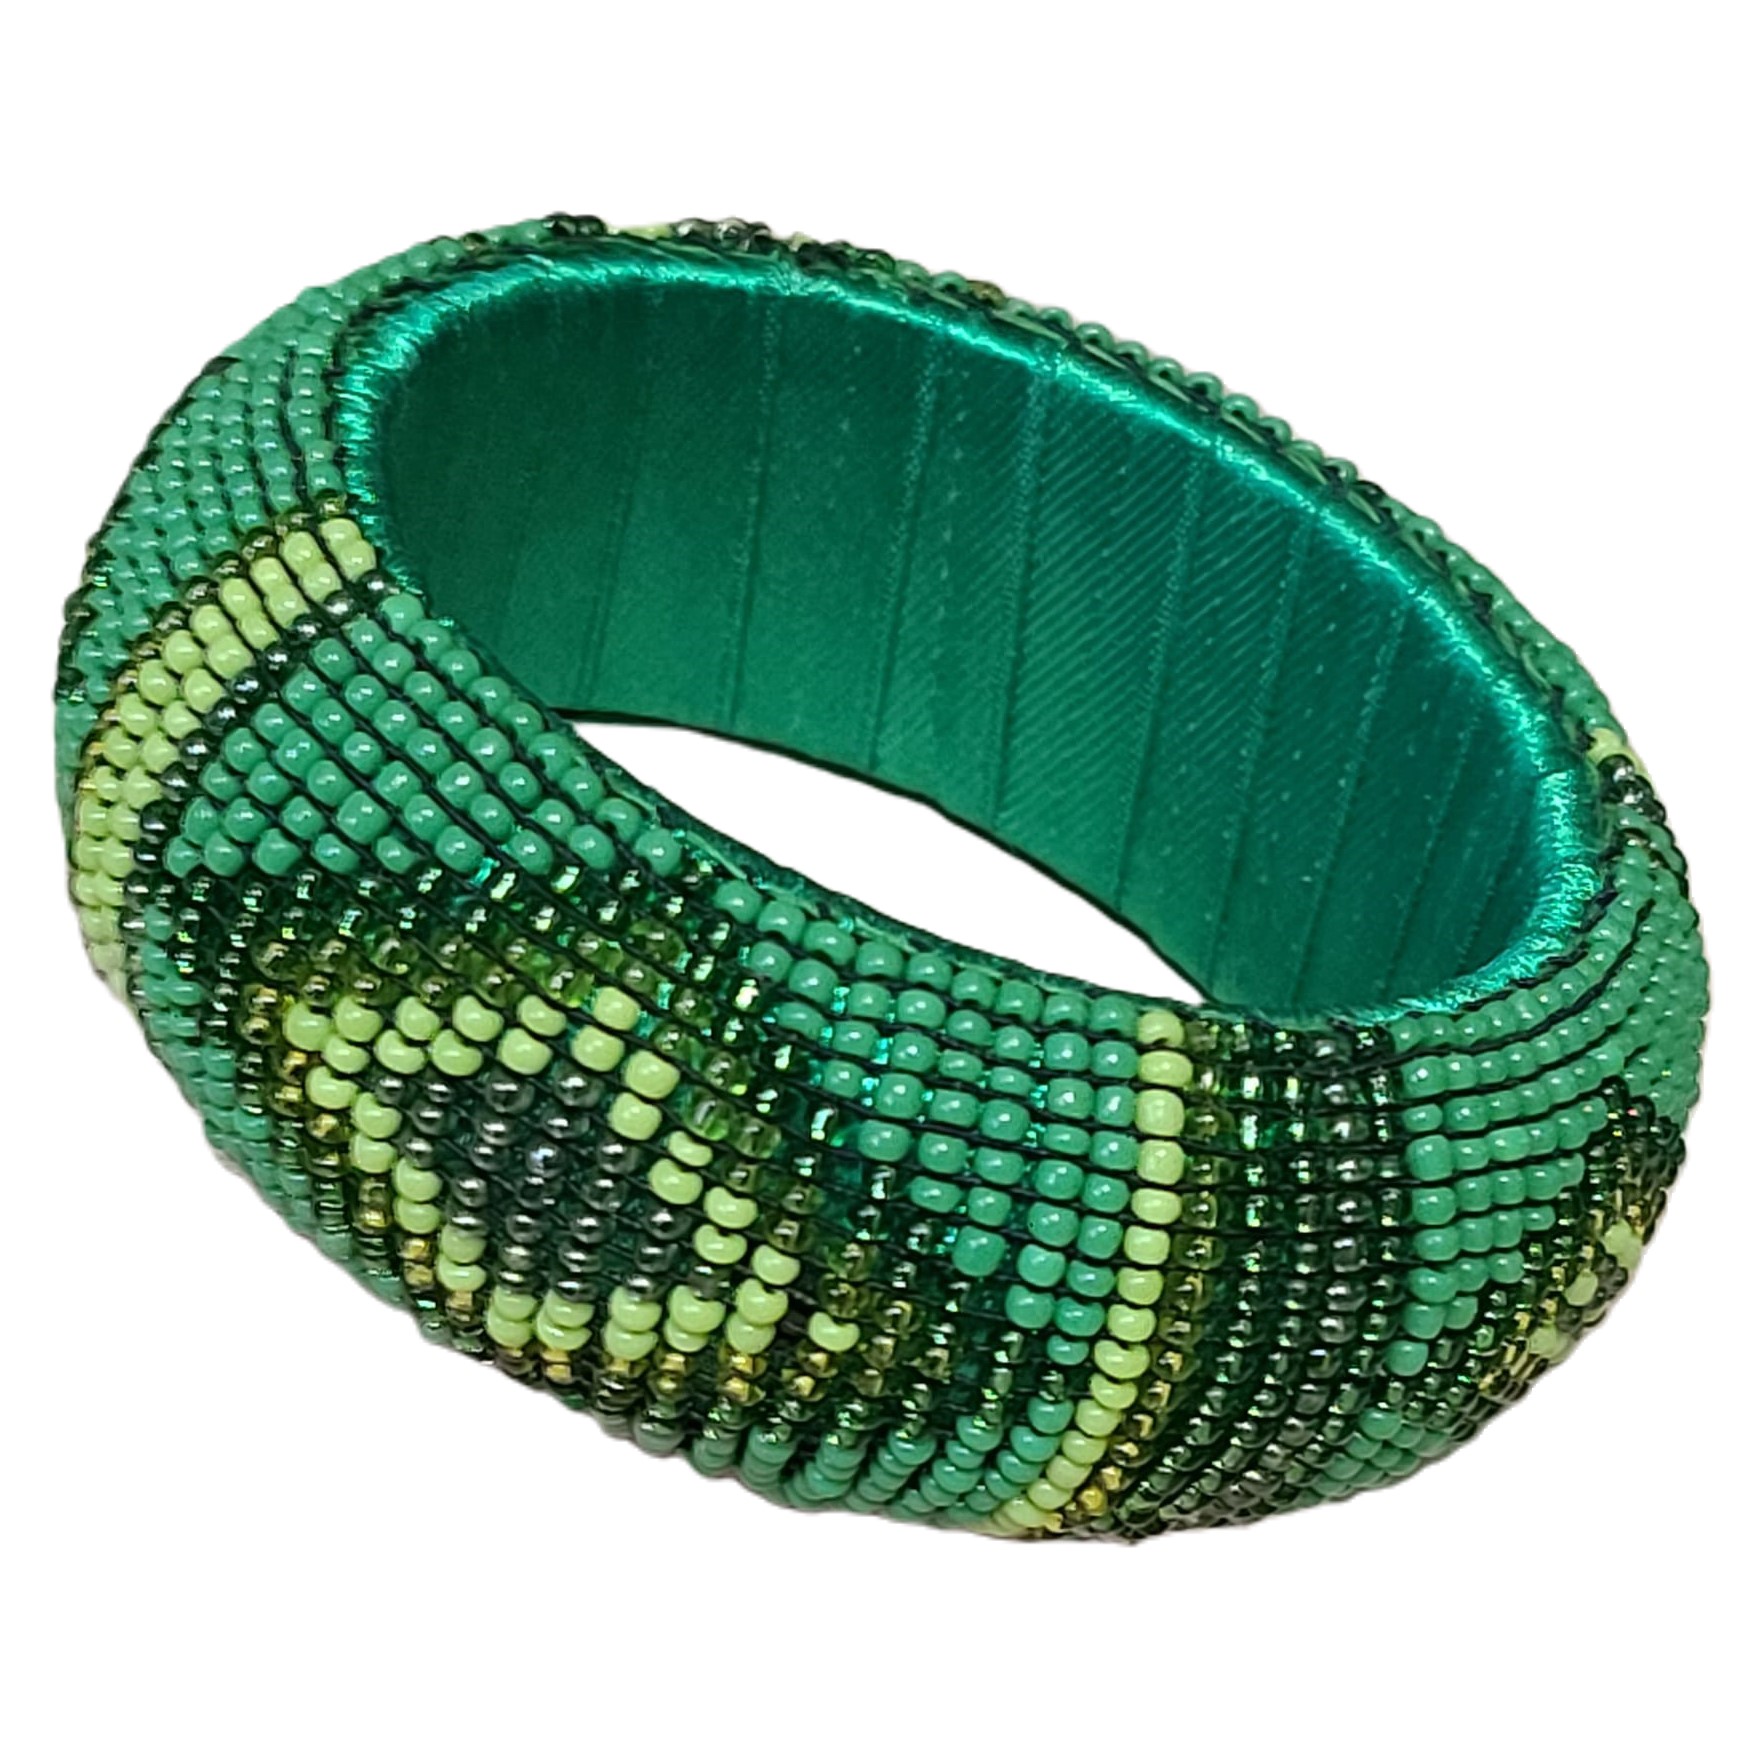 Green seed bead bangle bracelet